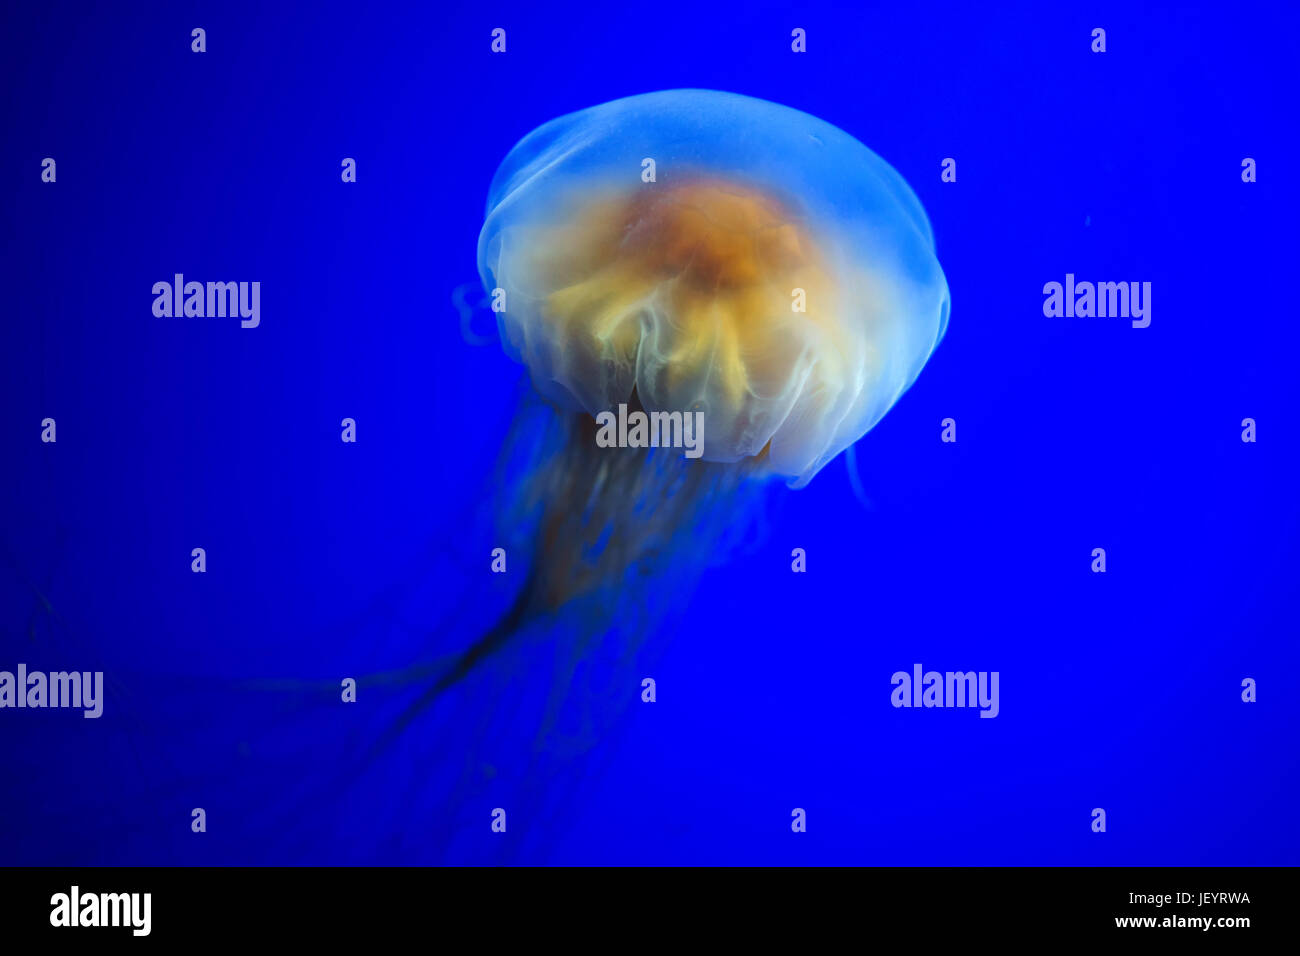 Leone la criniera medusa Foto Stock